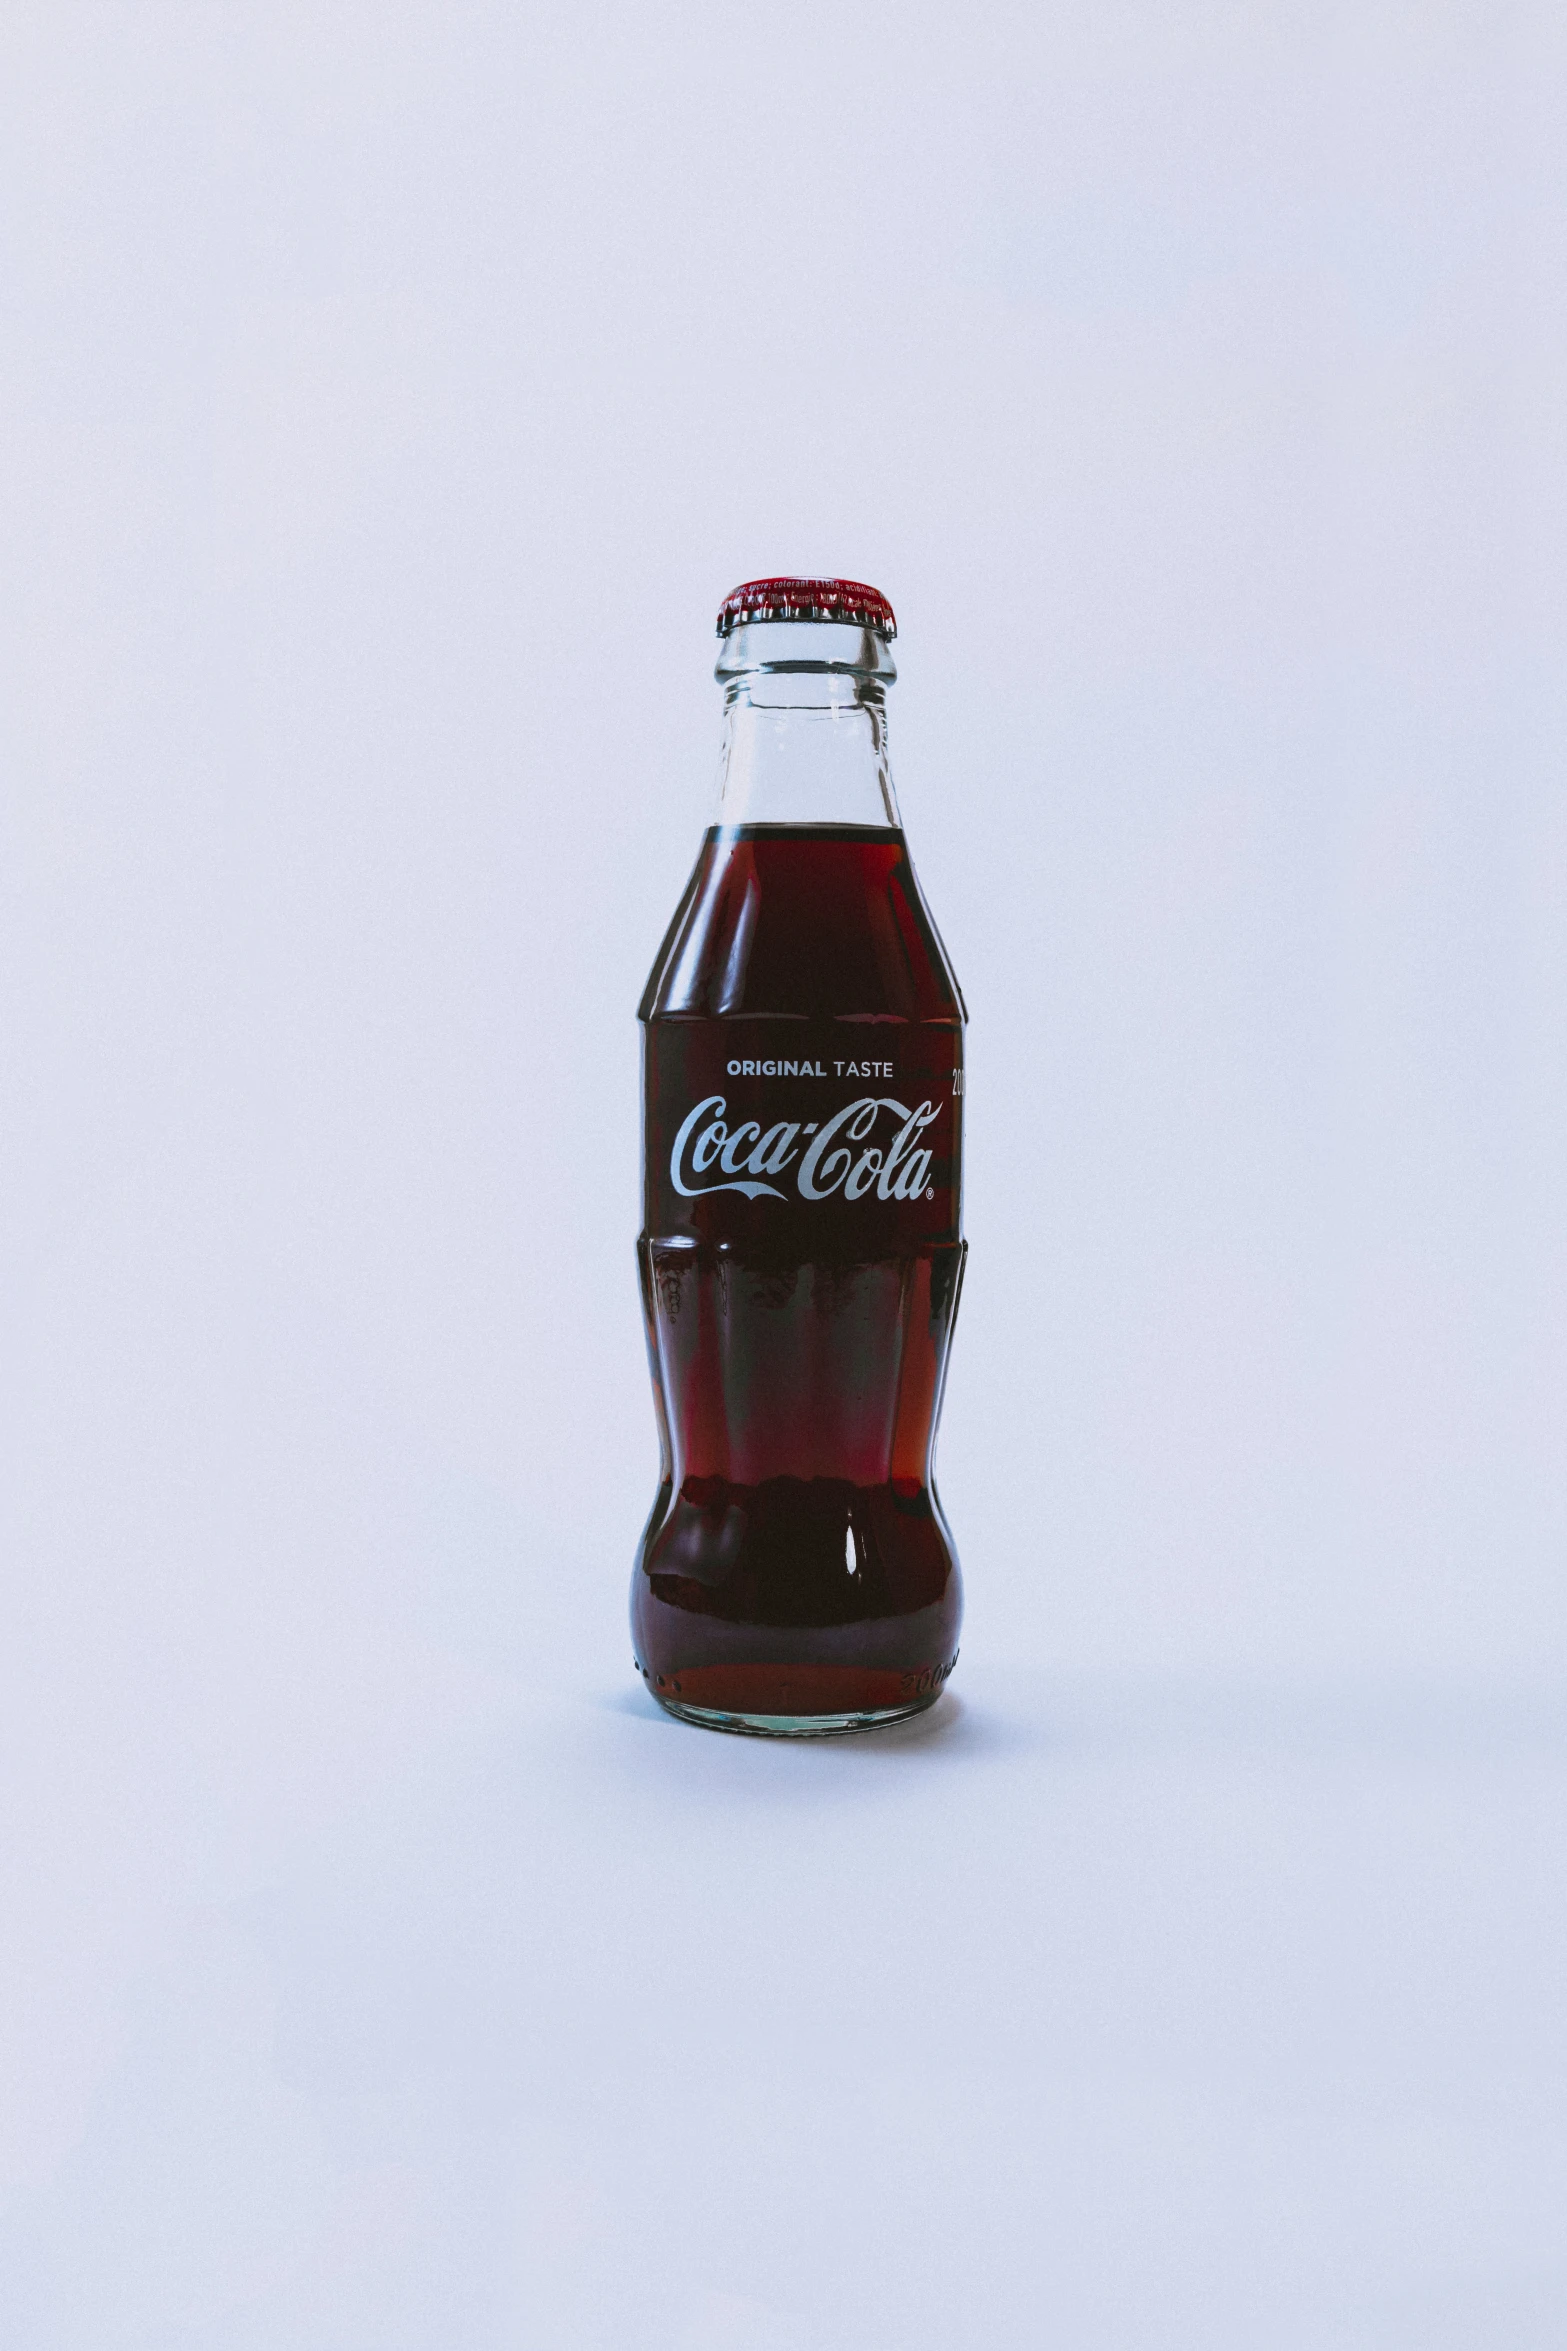 a bottle of soda on a plain white background